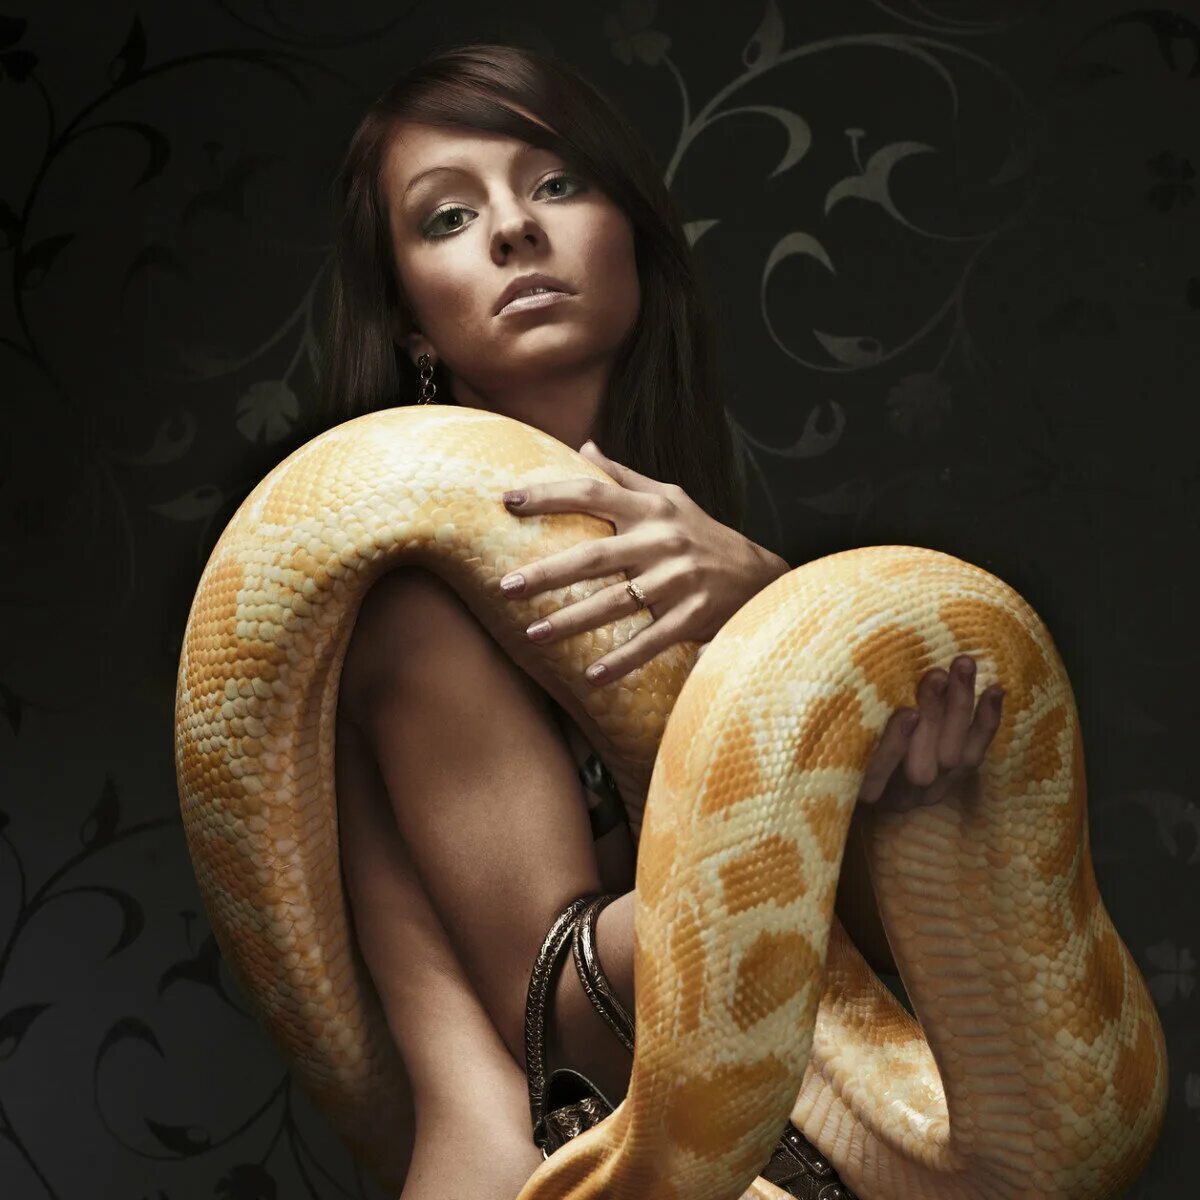 Змея на полу. Девушка змея. Девушка со змеями. Красивая девушка со змеей.